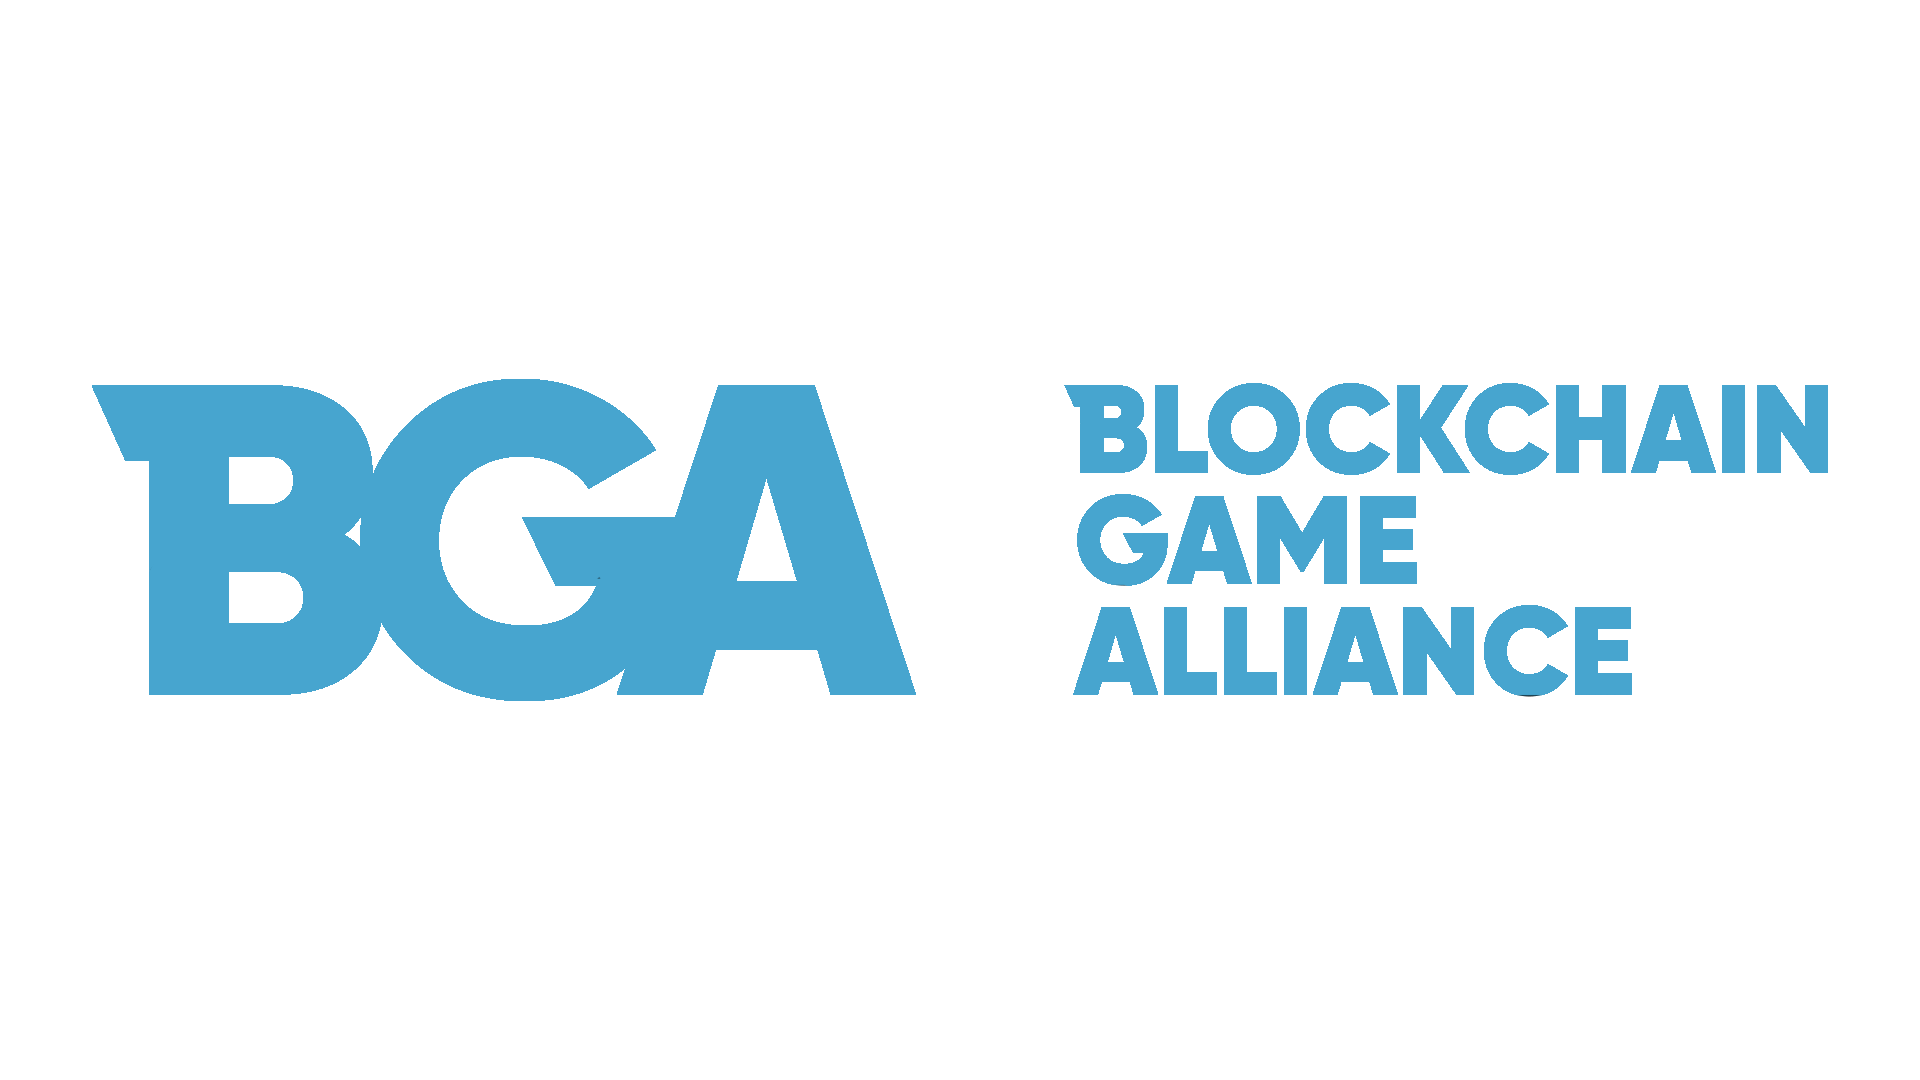 Blockchain Game Alliance Log